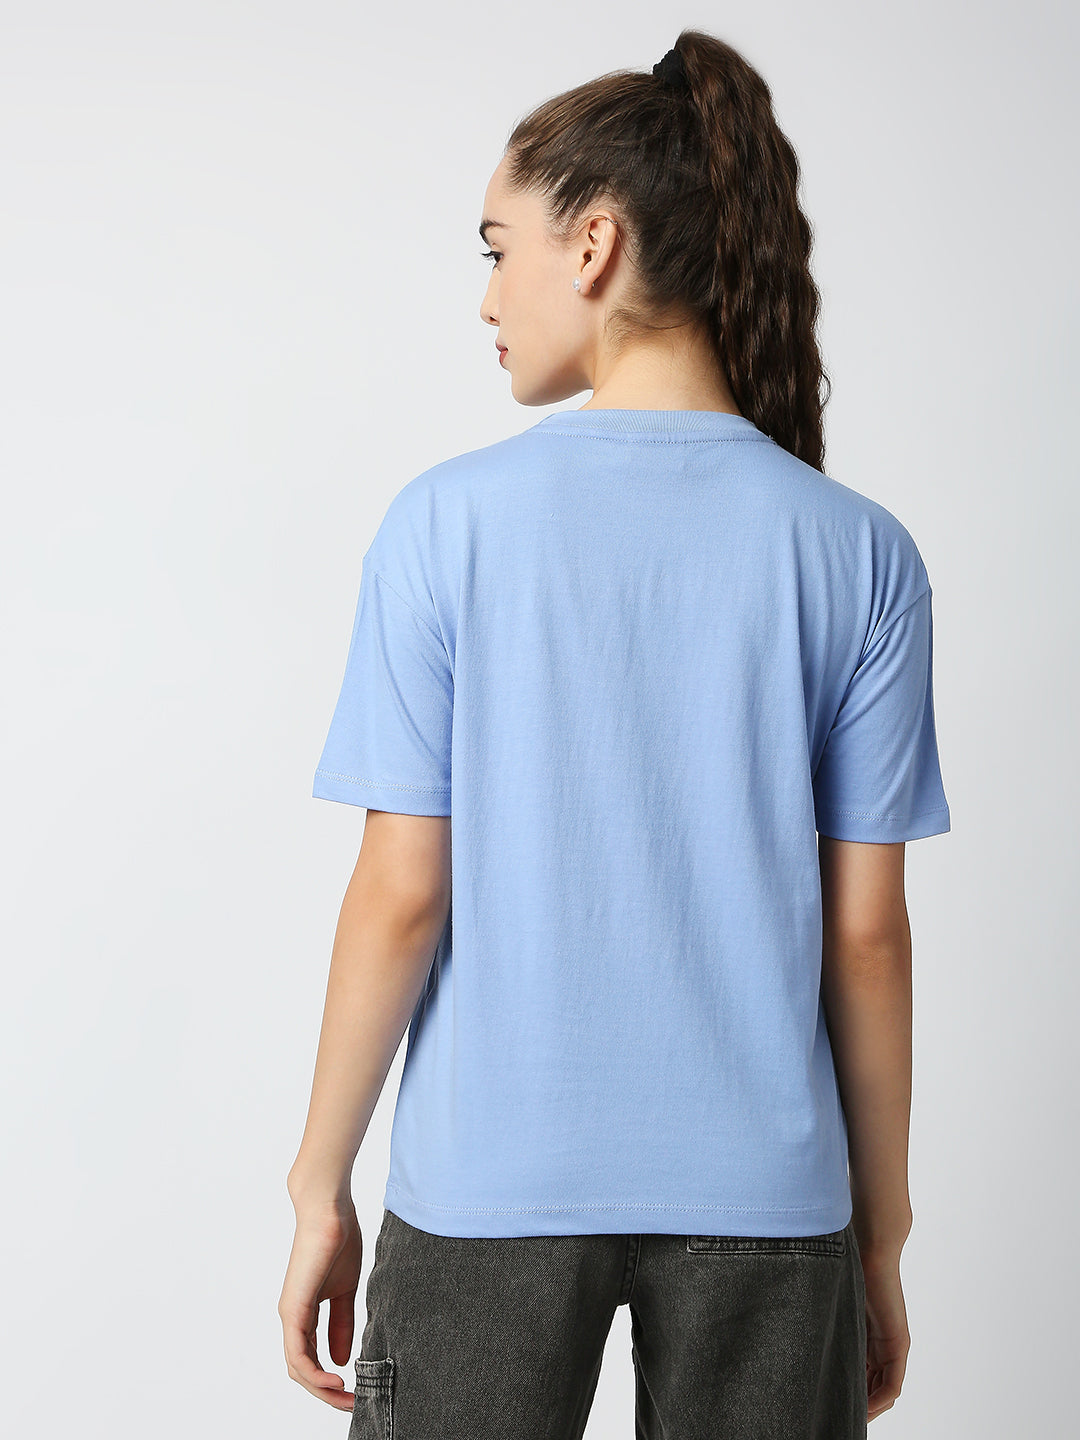 Buy Blamblack Women's Powder Blue Color Half Sleeves Comfort T Shirt